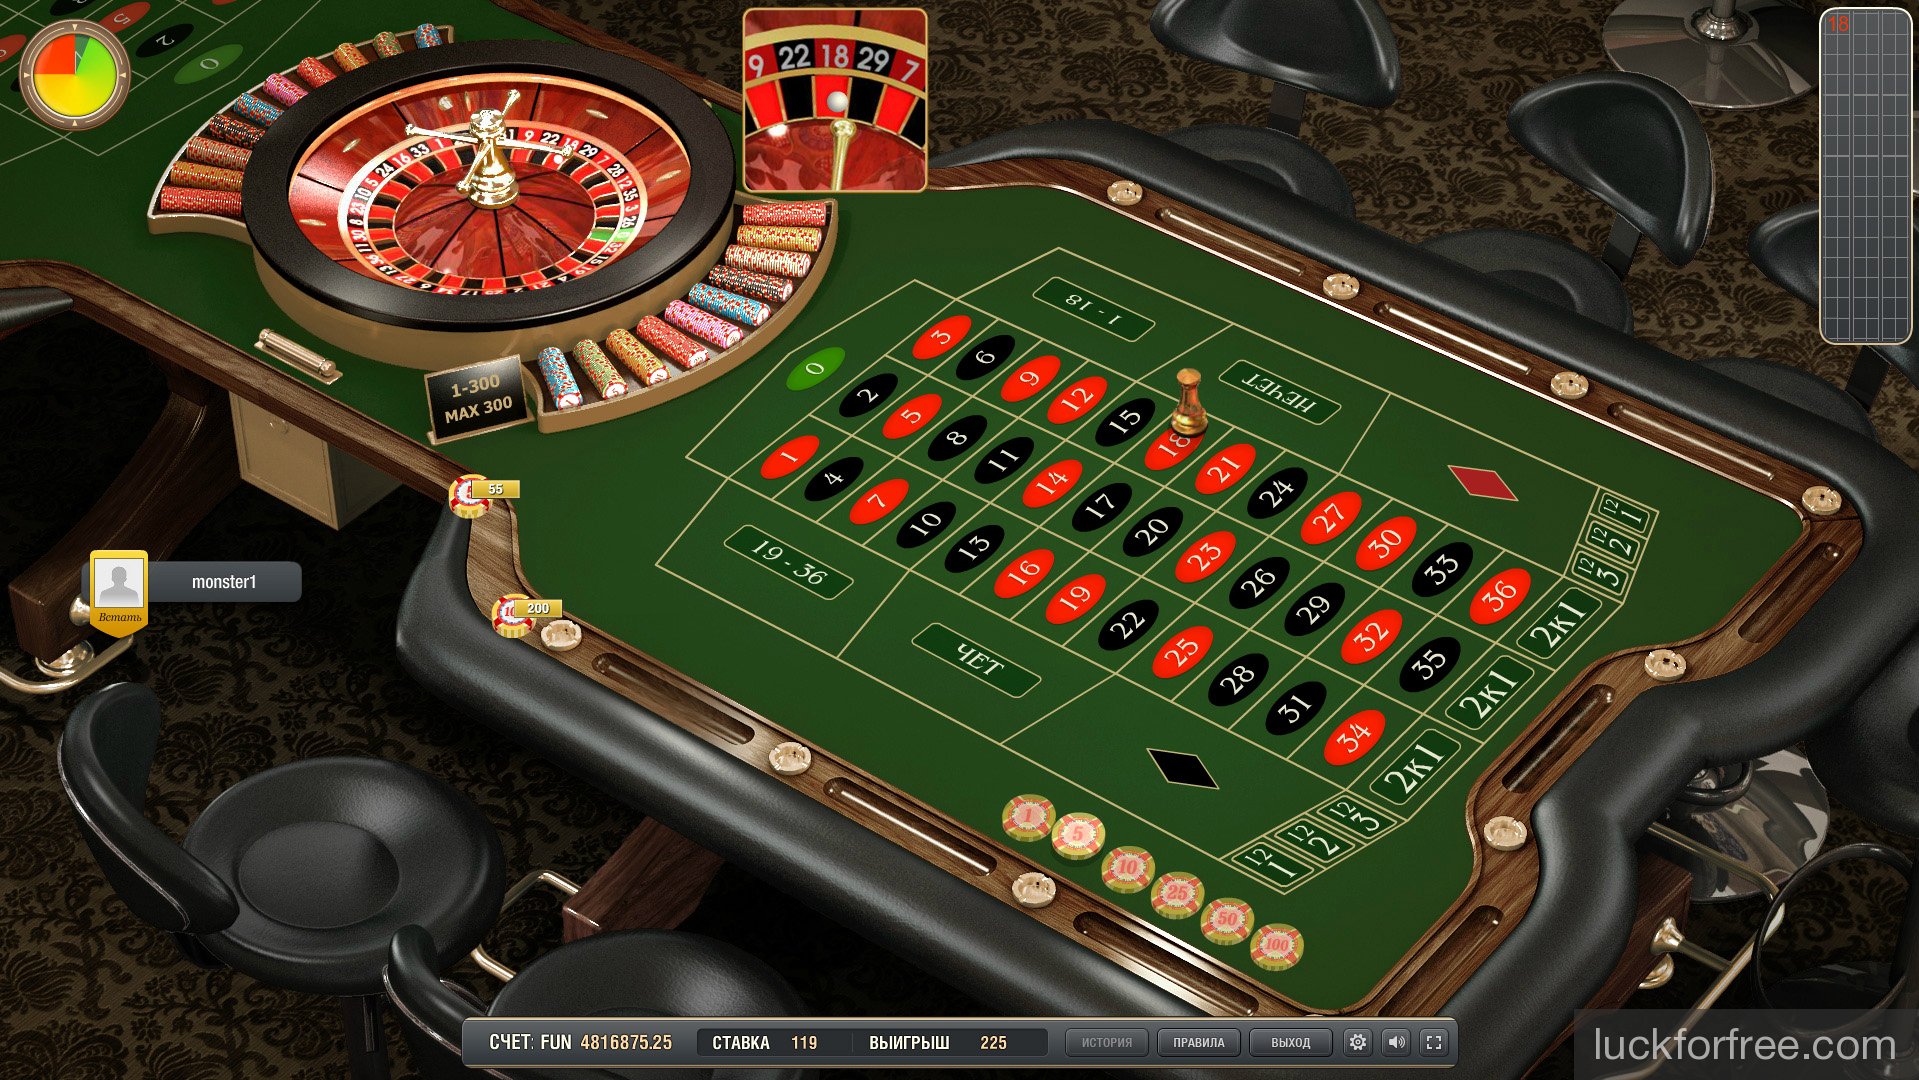 domnul jocuri de noroc casino online